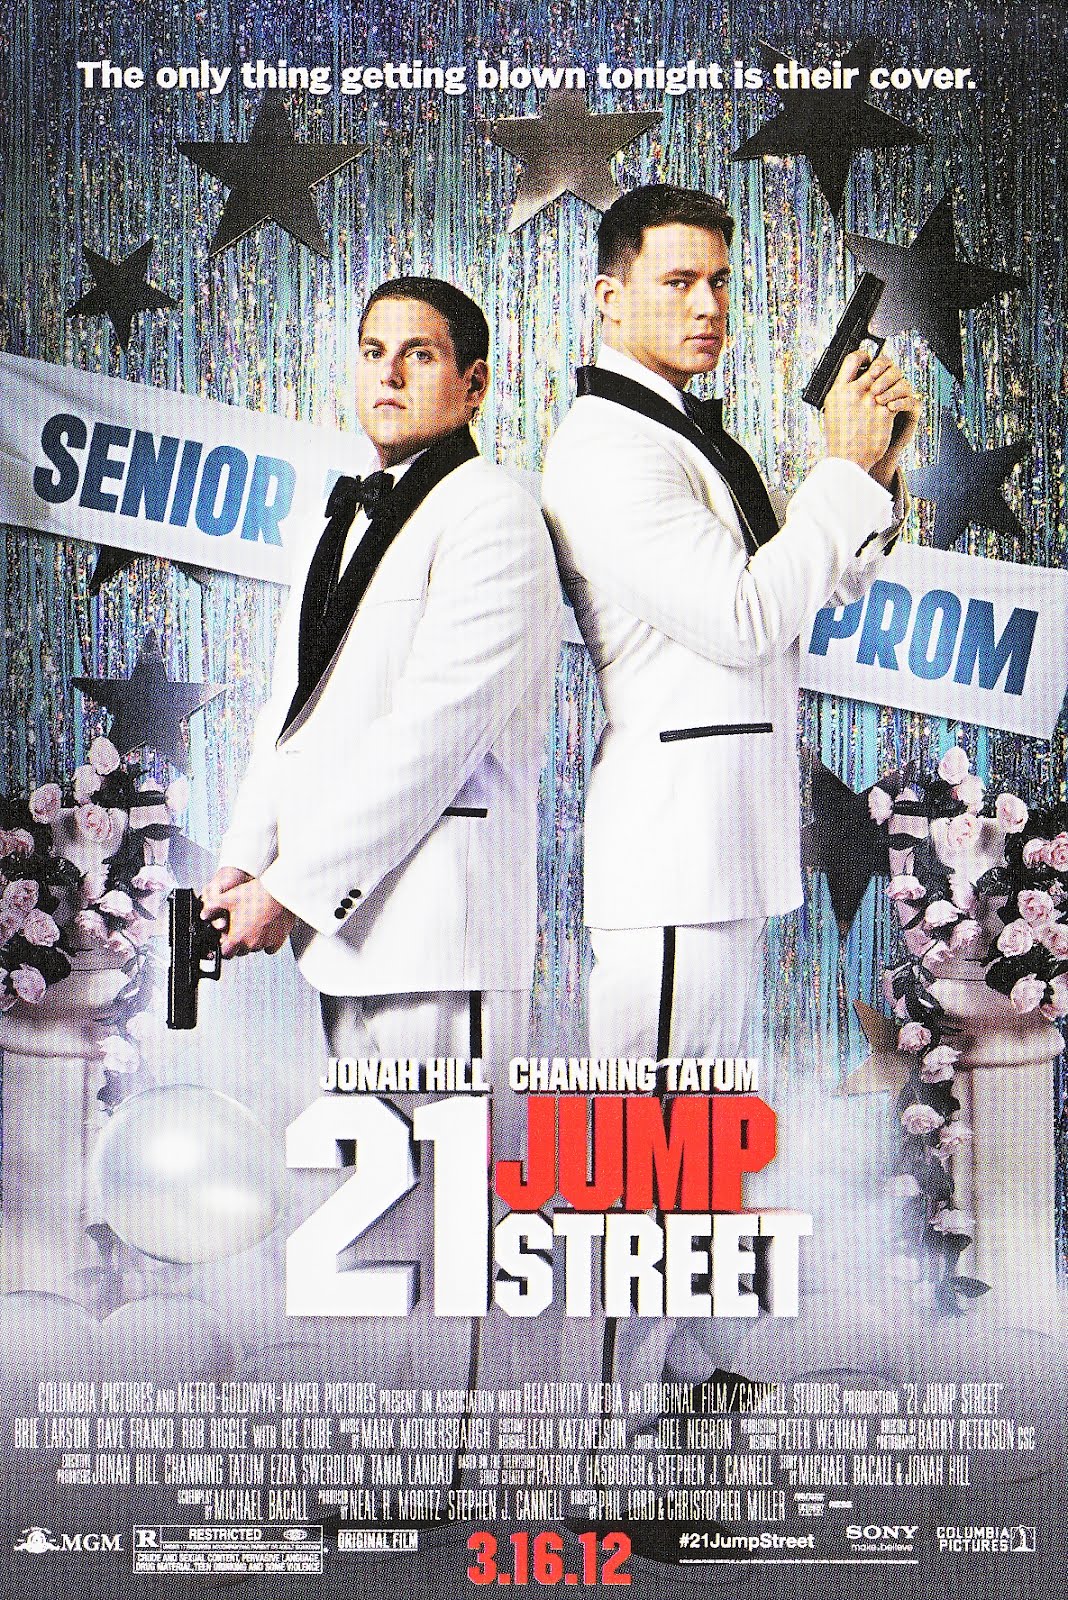 21 jump street full movie watch fre